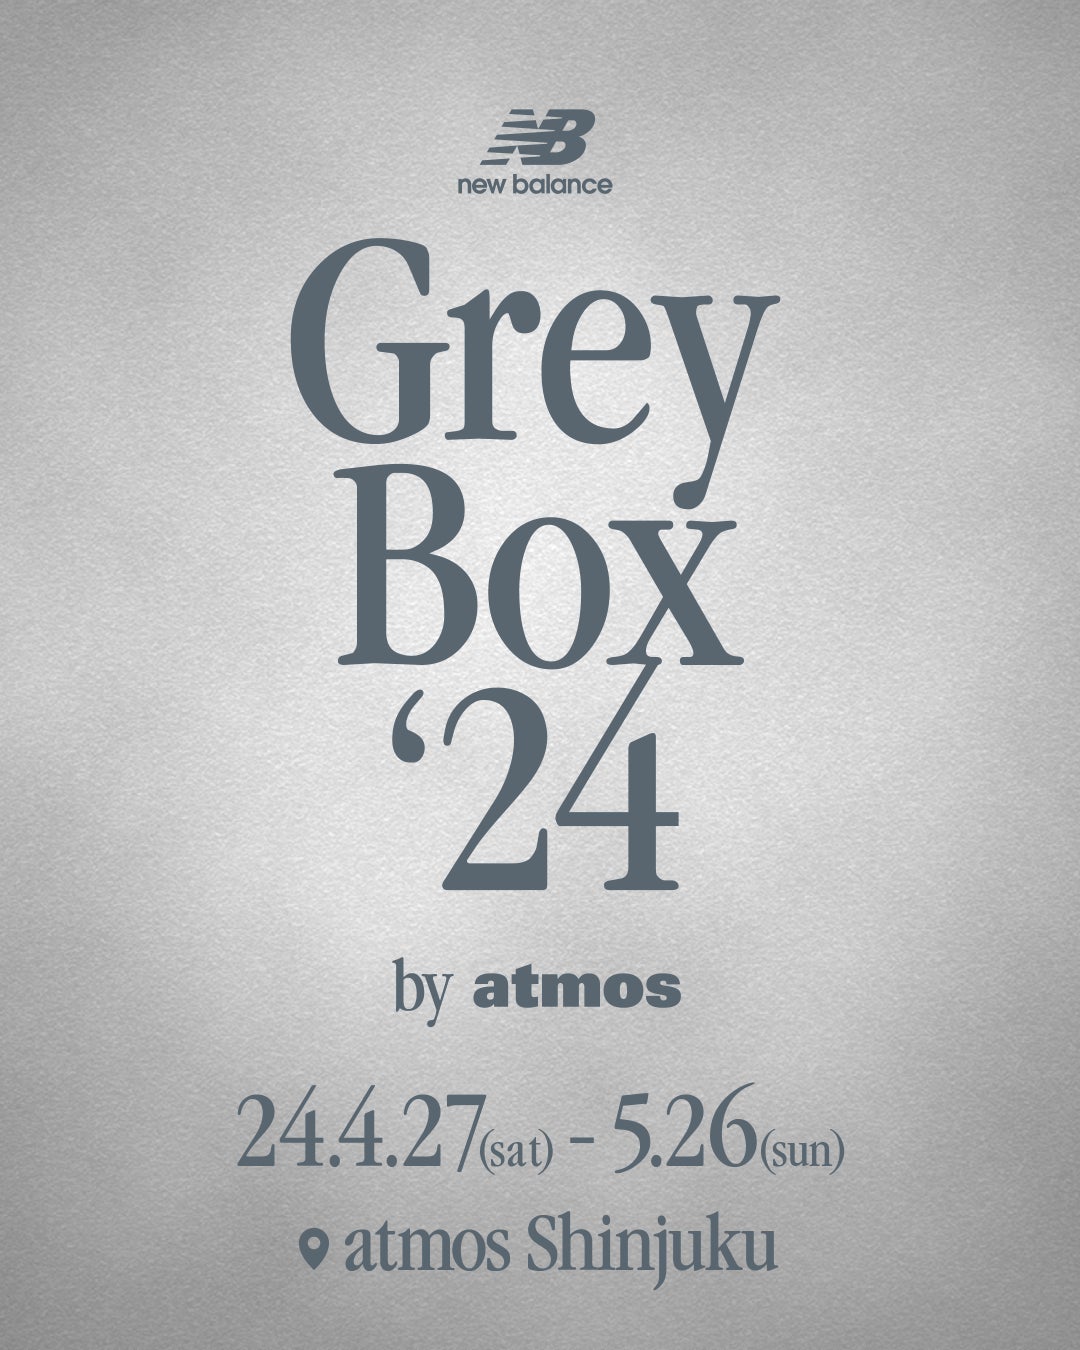 New Balanceの「Grey Box’24」キャンペーンを今シーズンもatmosで開催